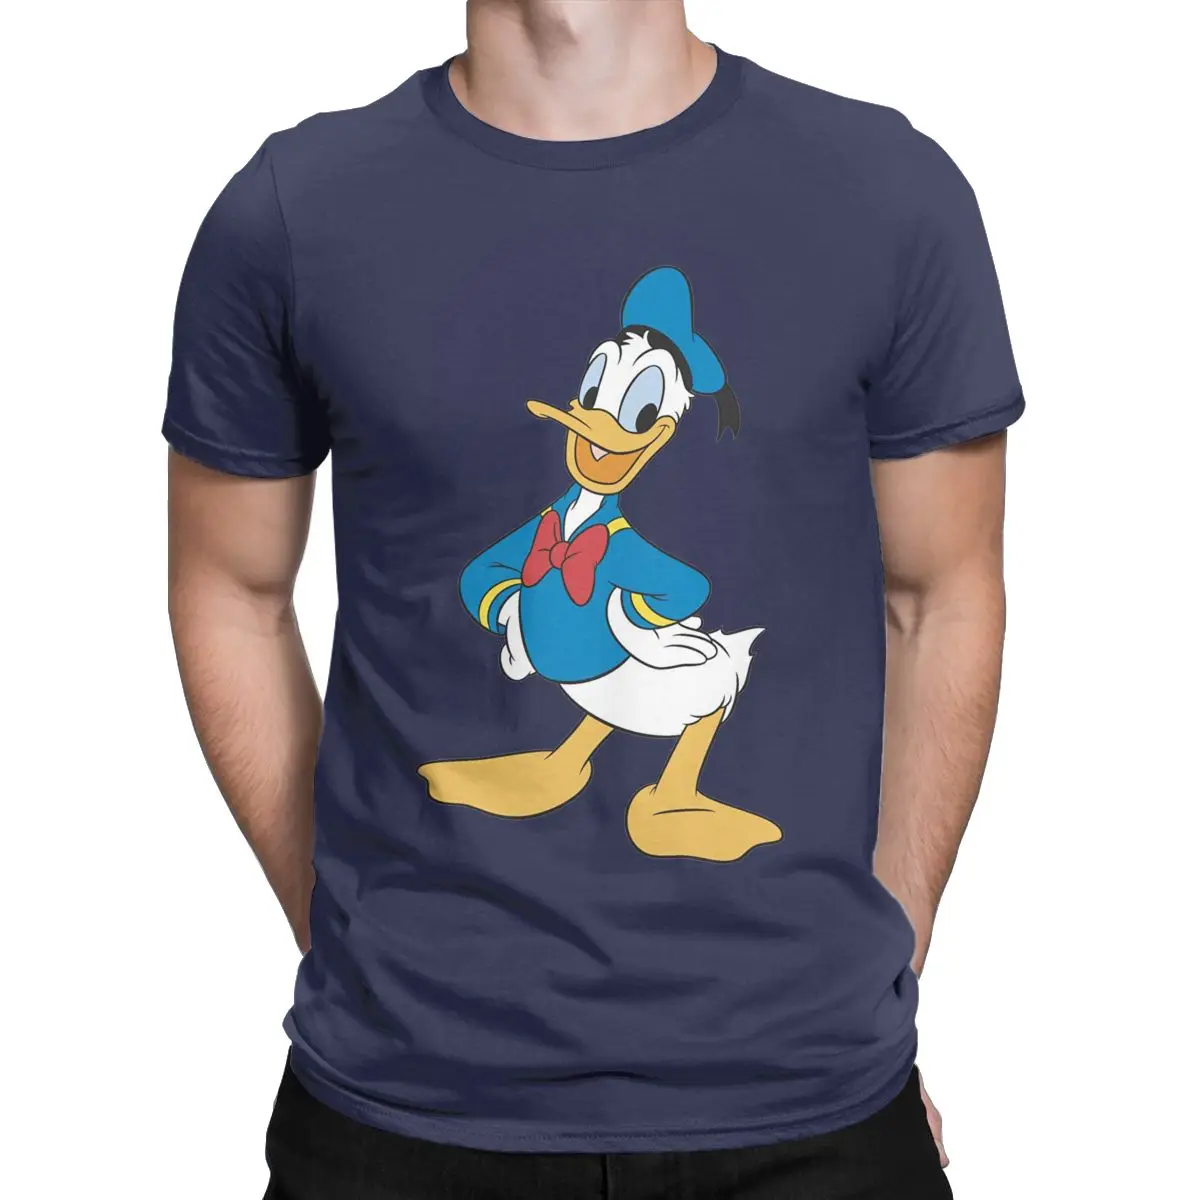 

Disney Donald Duck Hands On Hips T-Shirt For Men Awesome 100% Cotton Tee Shirt Crewneck Short Sleeve T Shirt Gift Idea Tops